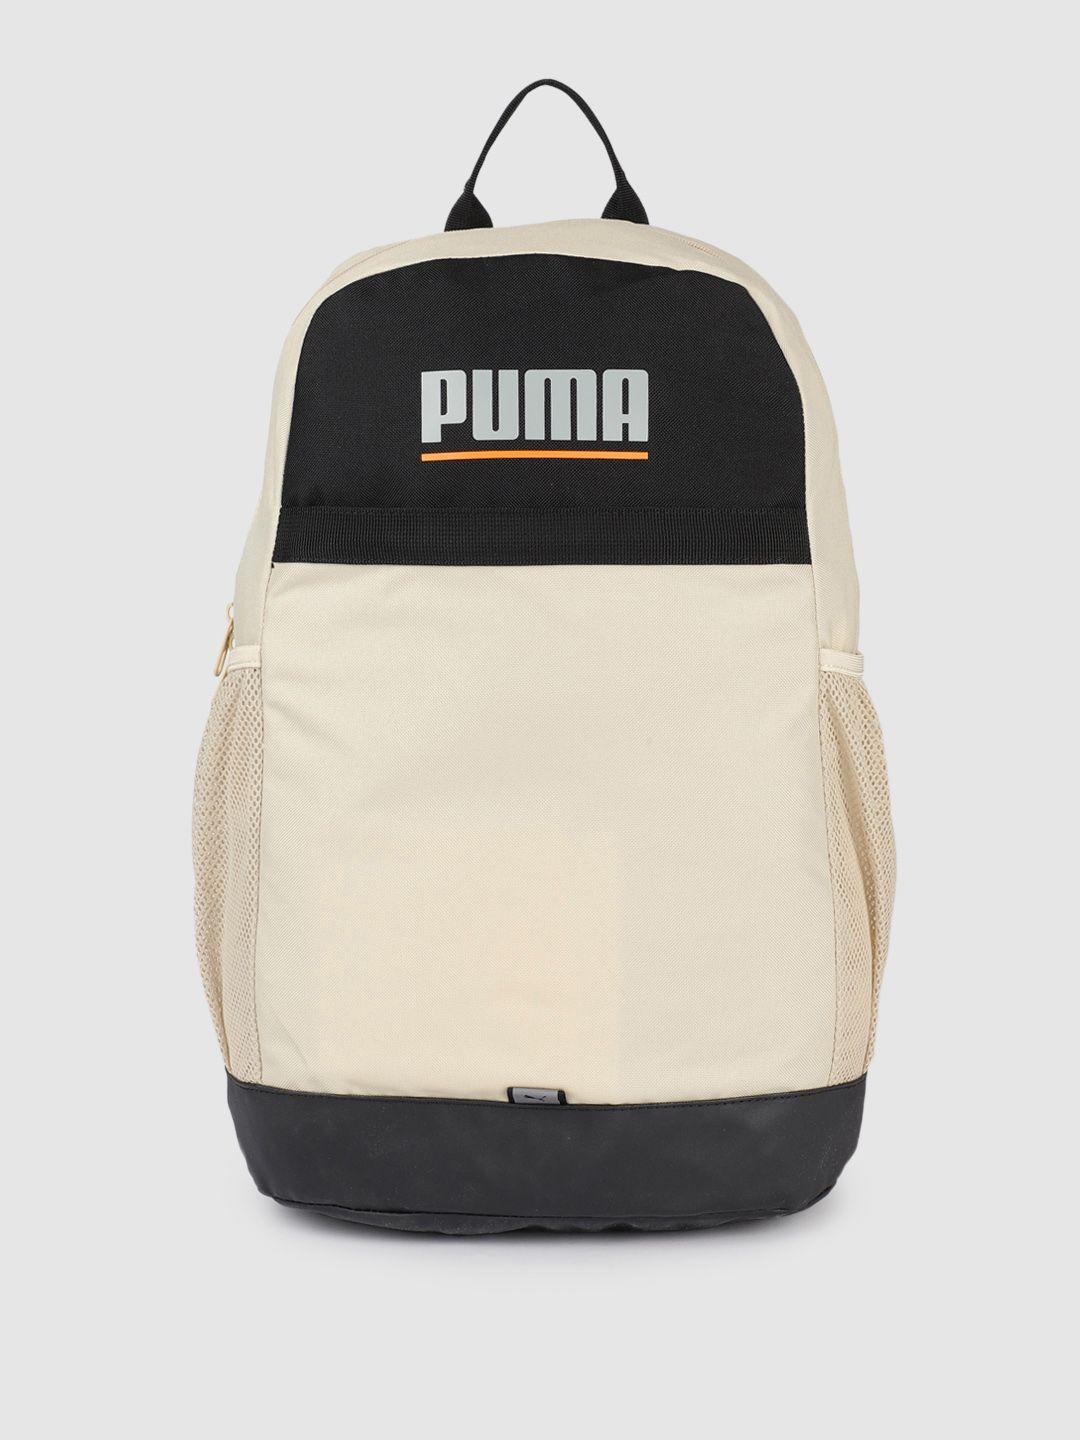 Puma Plus Brand Logo Printed Backpack